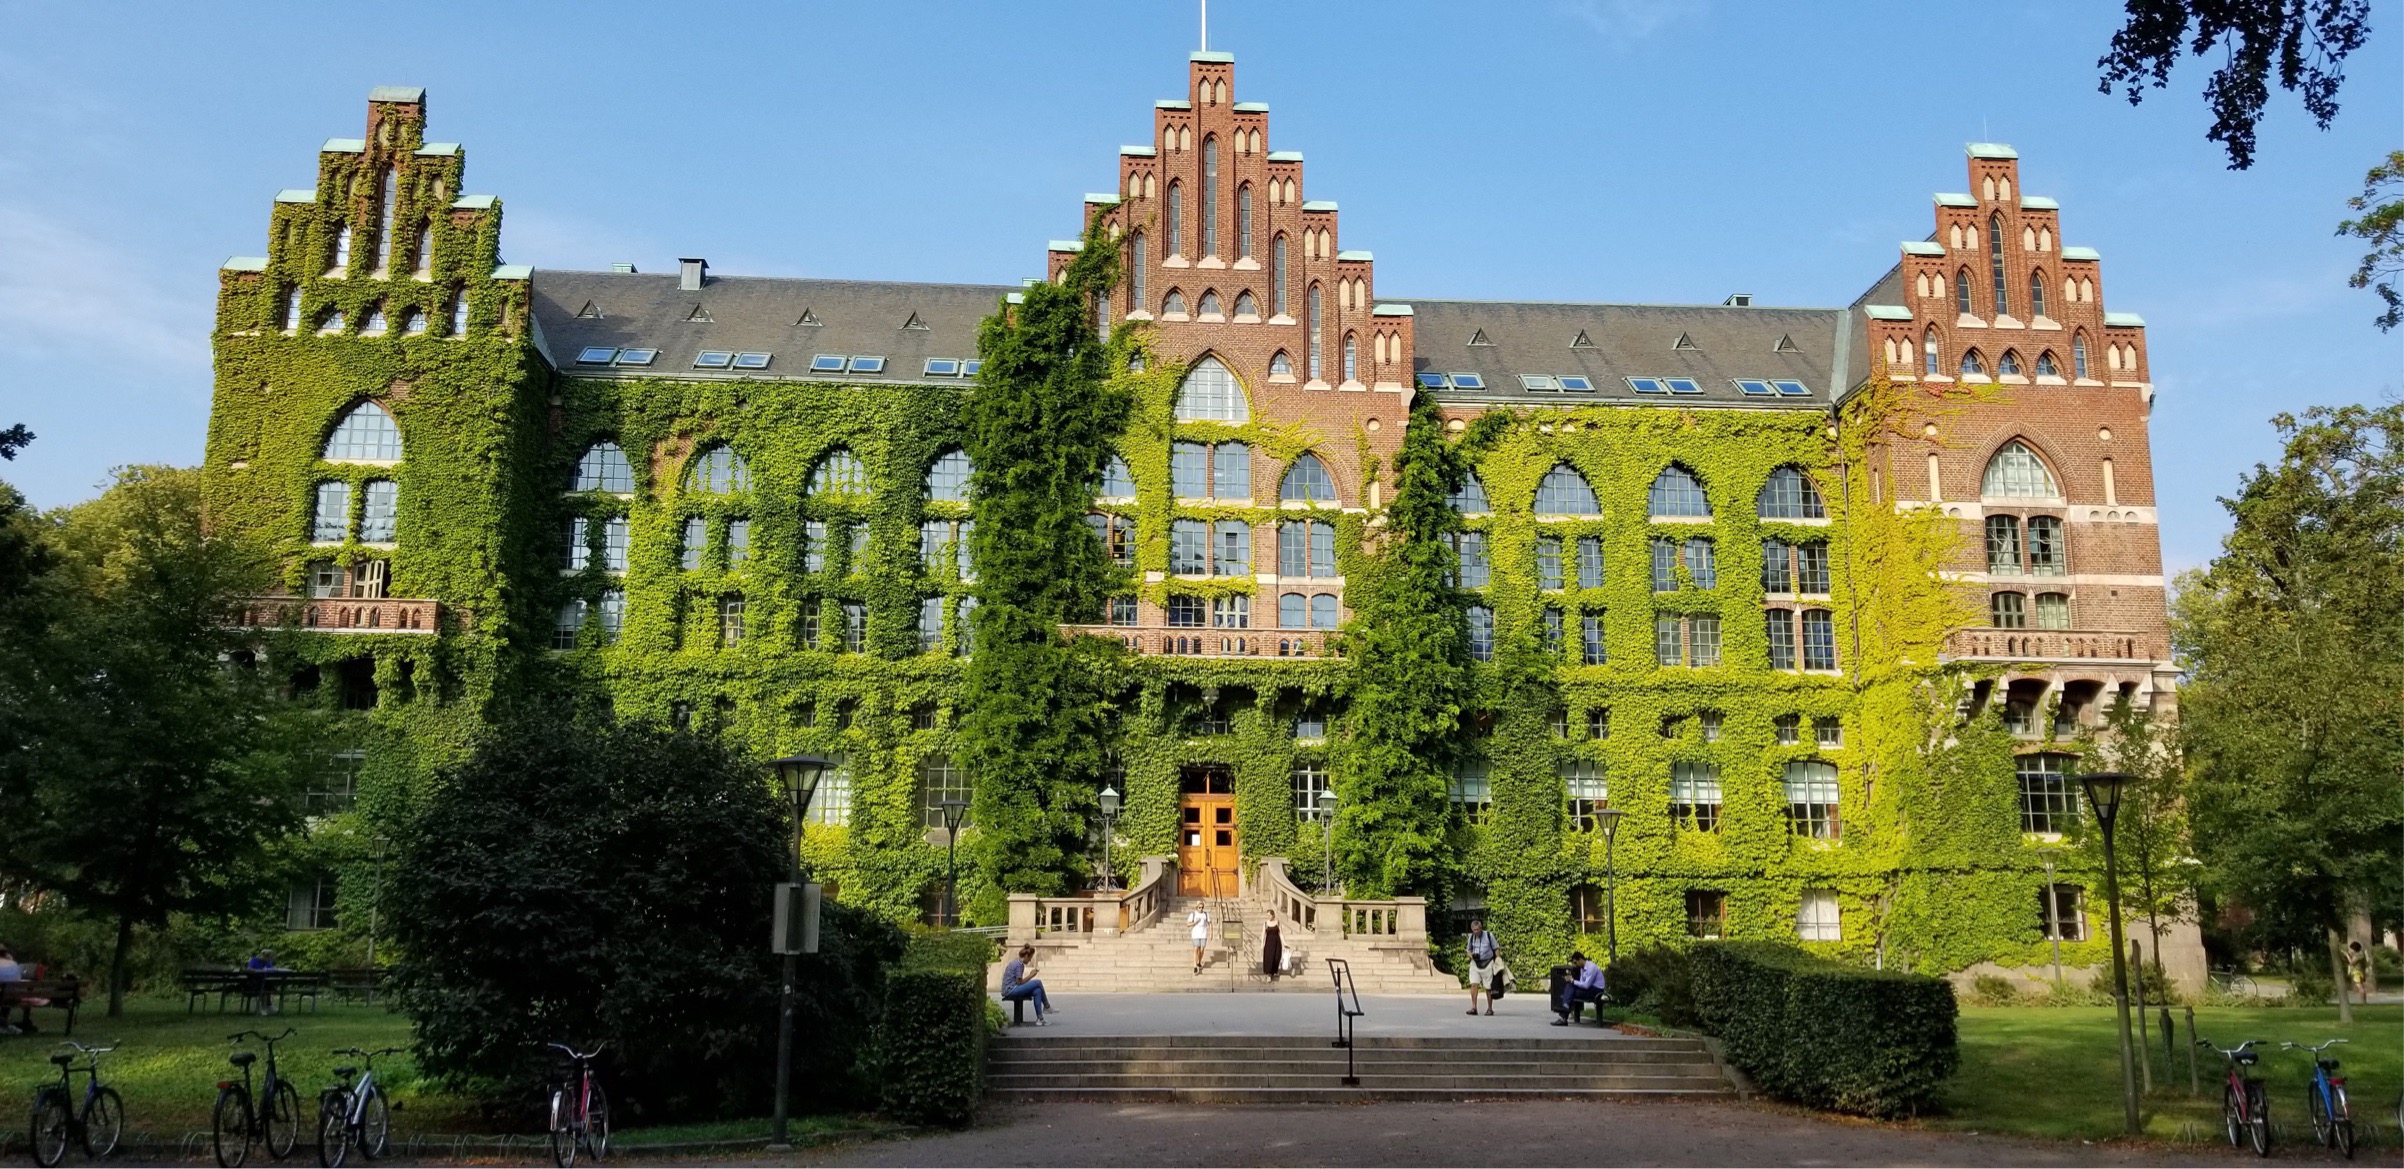 Lund University 是瑞典🇸🇪最古老的大学之一。小镇也是围绕着大学设置的。校园上安静平和